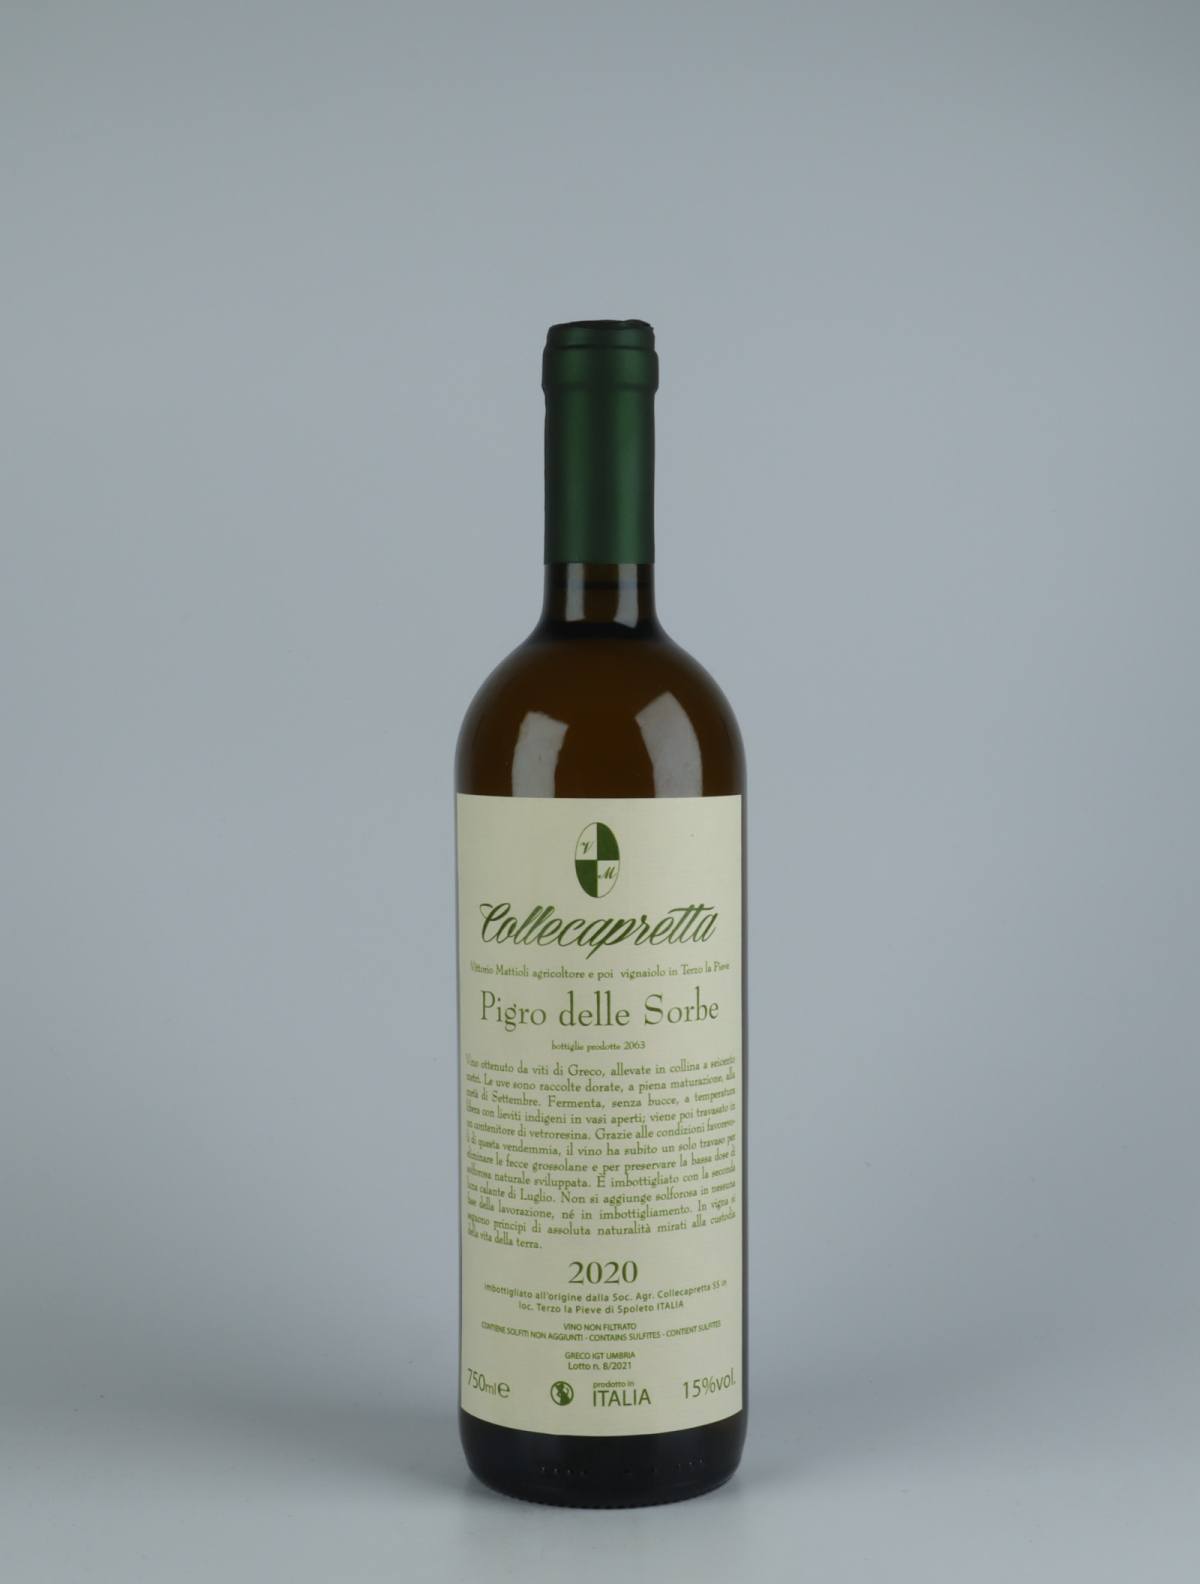 En flaske 2020 Pigro delle Sorbe Hvidvin fra Collecapretta, Umbrien i Italien